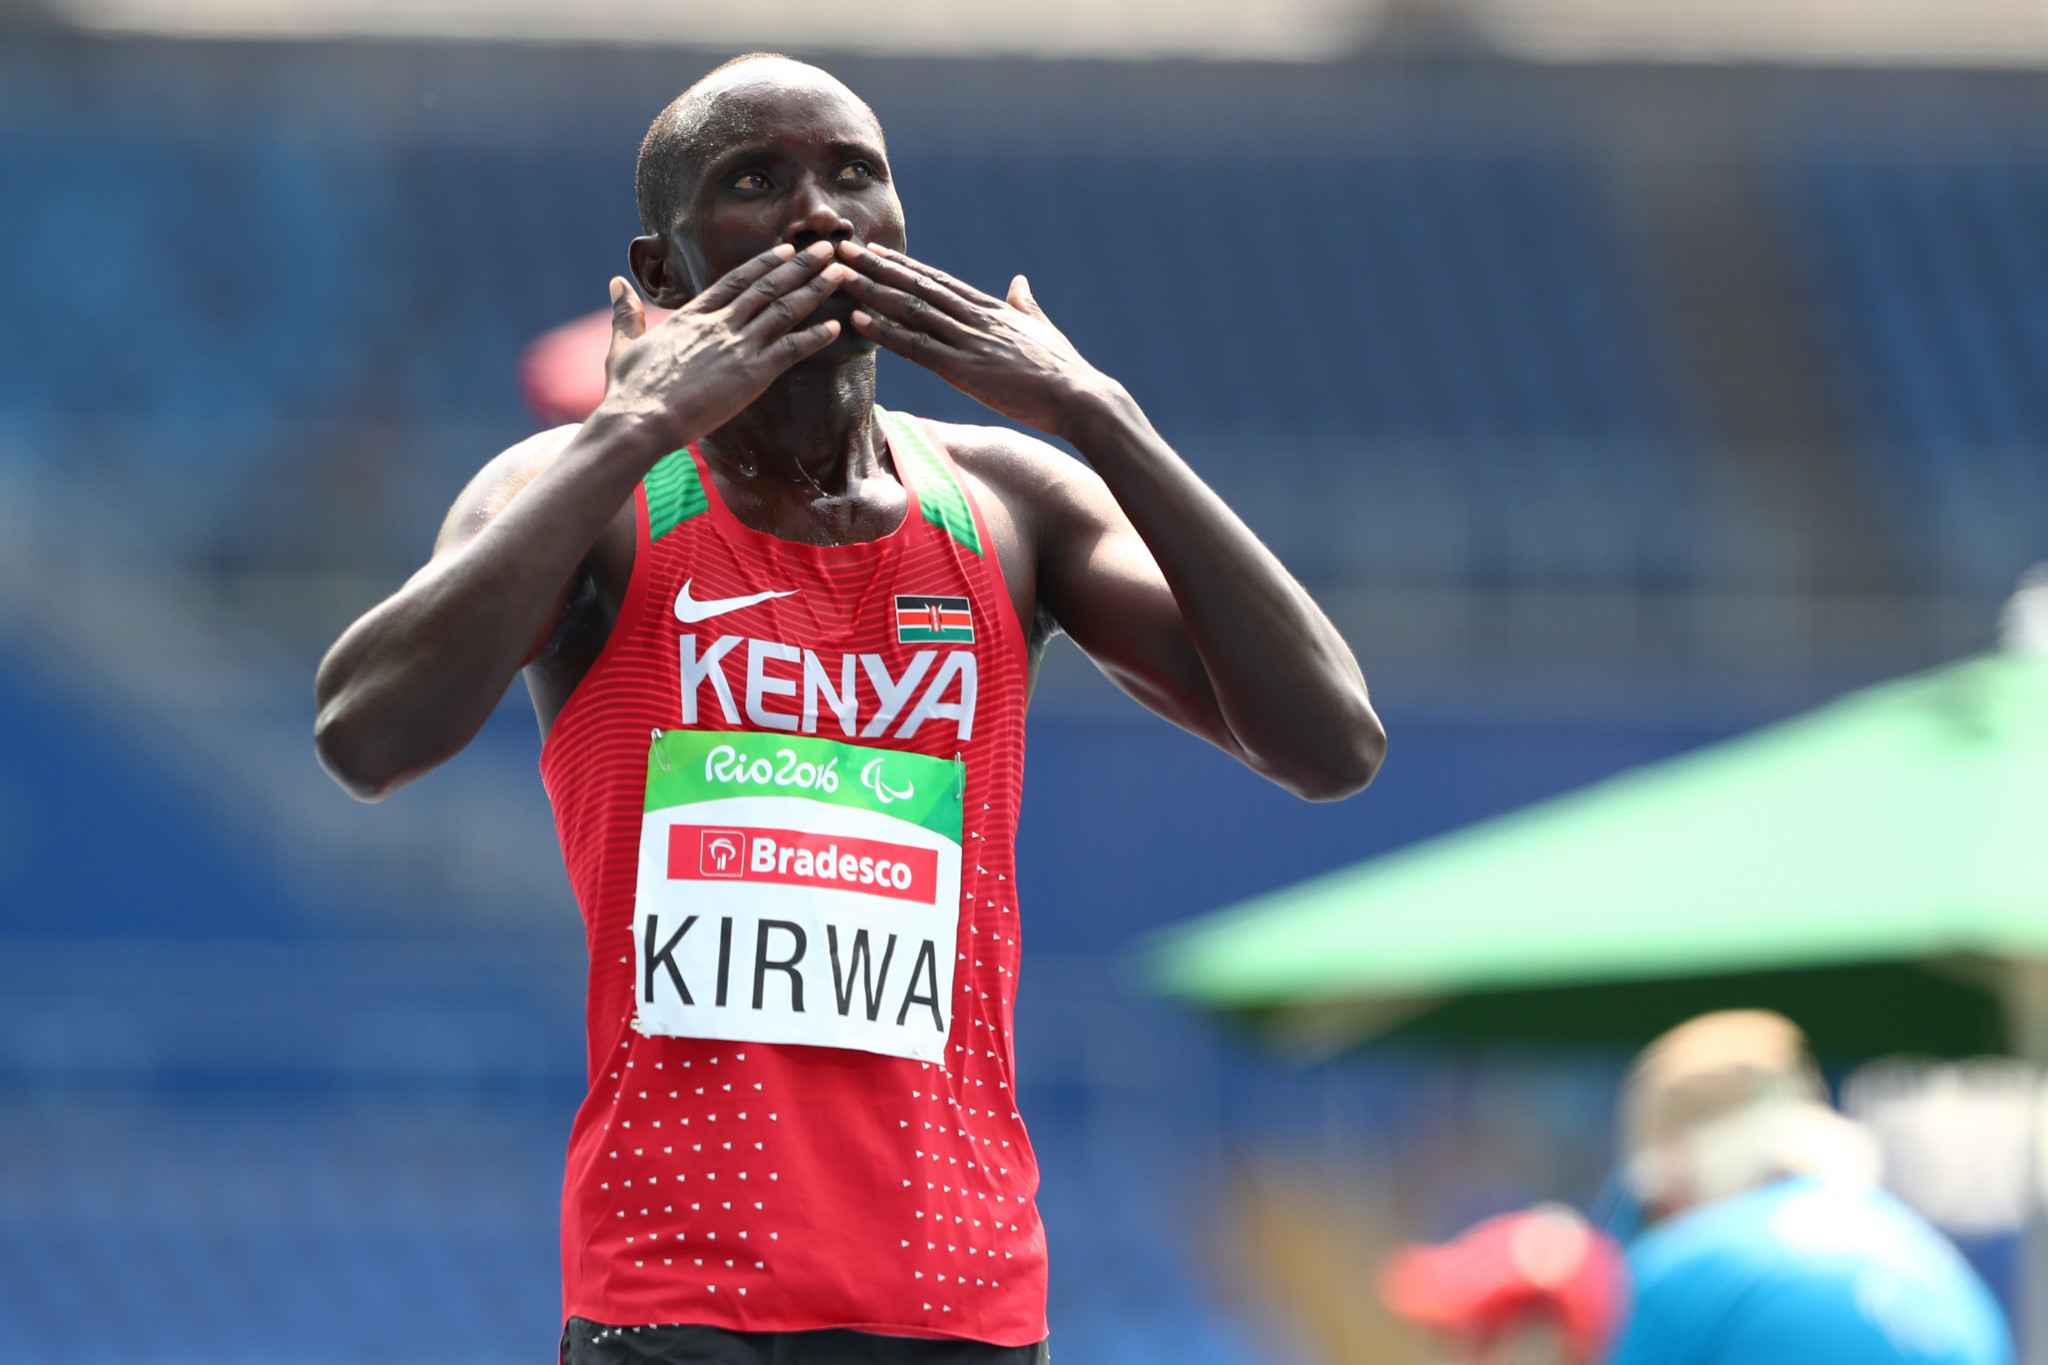 Paralympic 5,000m champion Kirwa to switch to marathon after Tokyo 2020